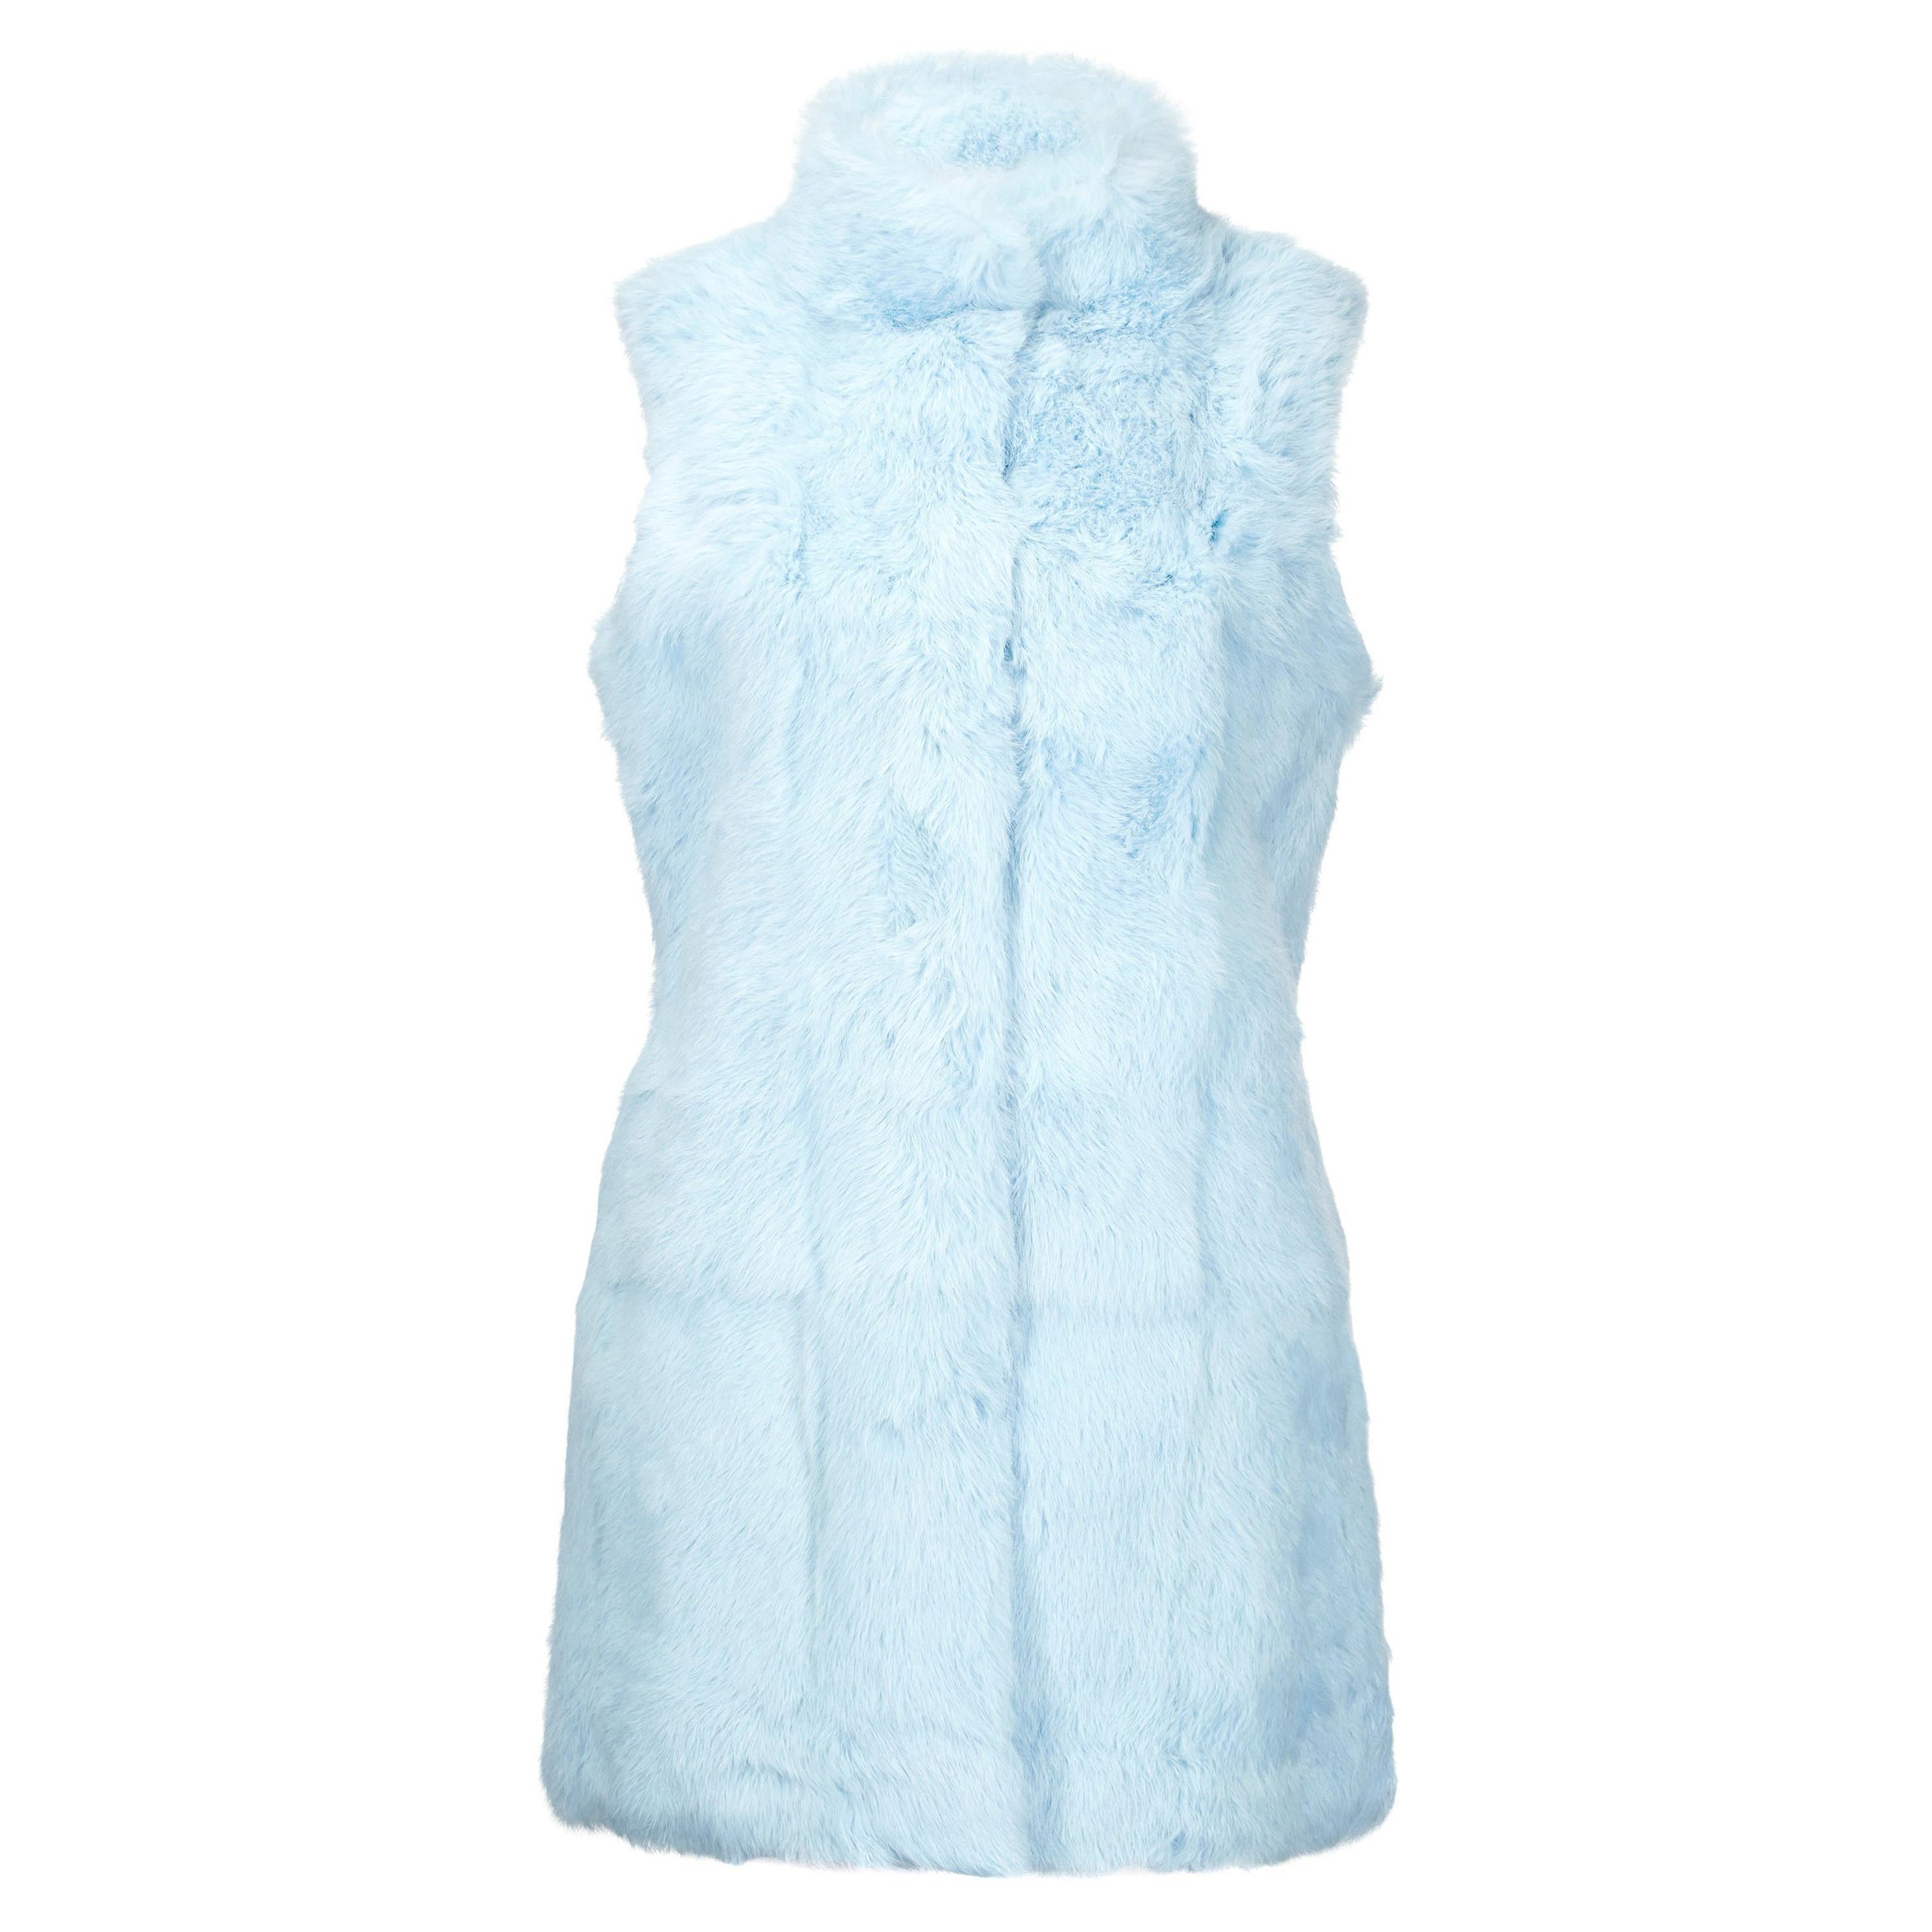 Verheyen London Nehru Gilet in Rabbit Fur in Iced Blue Topaz - Size Uk M For Sale